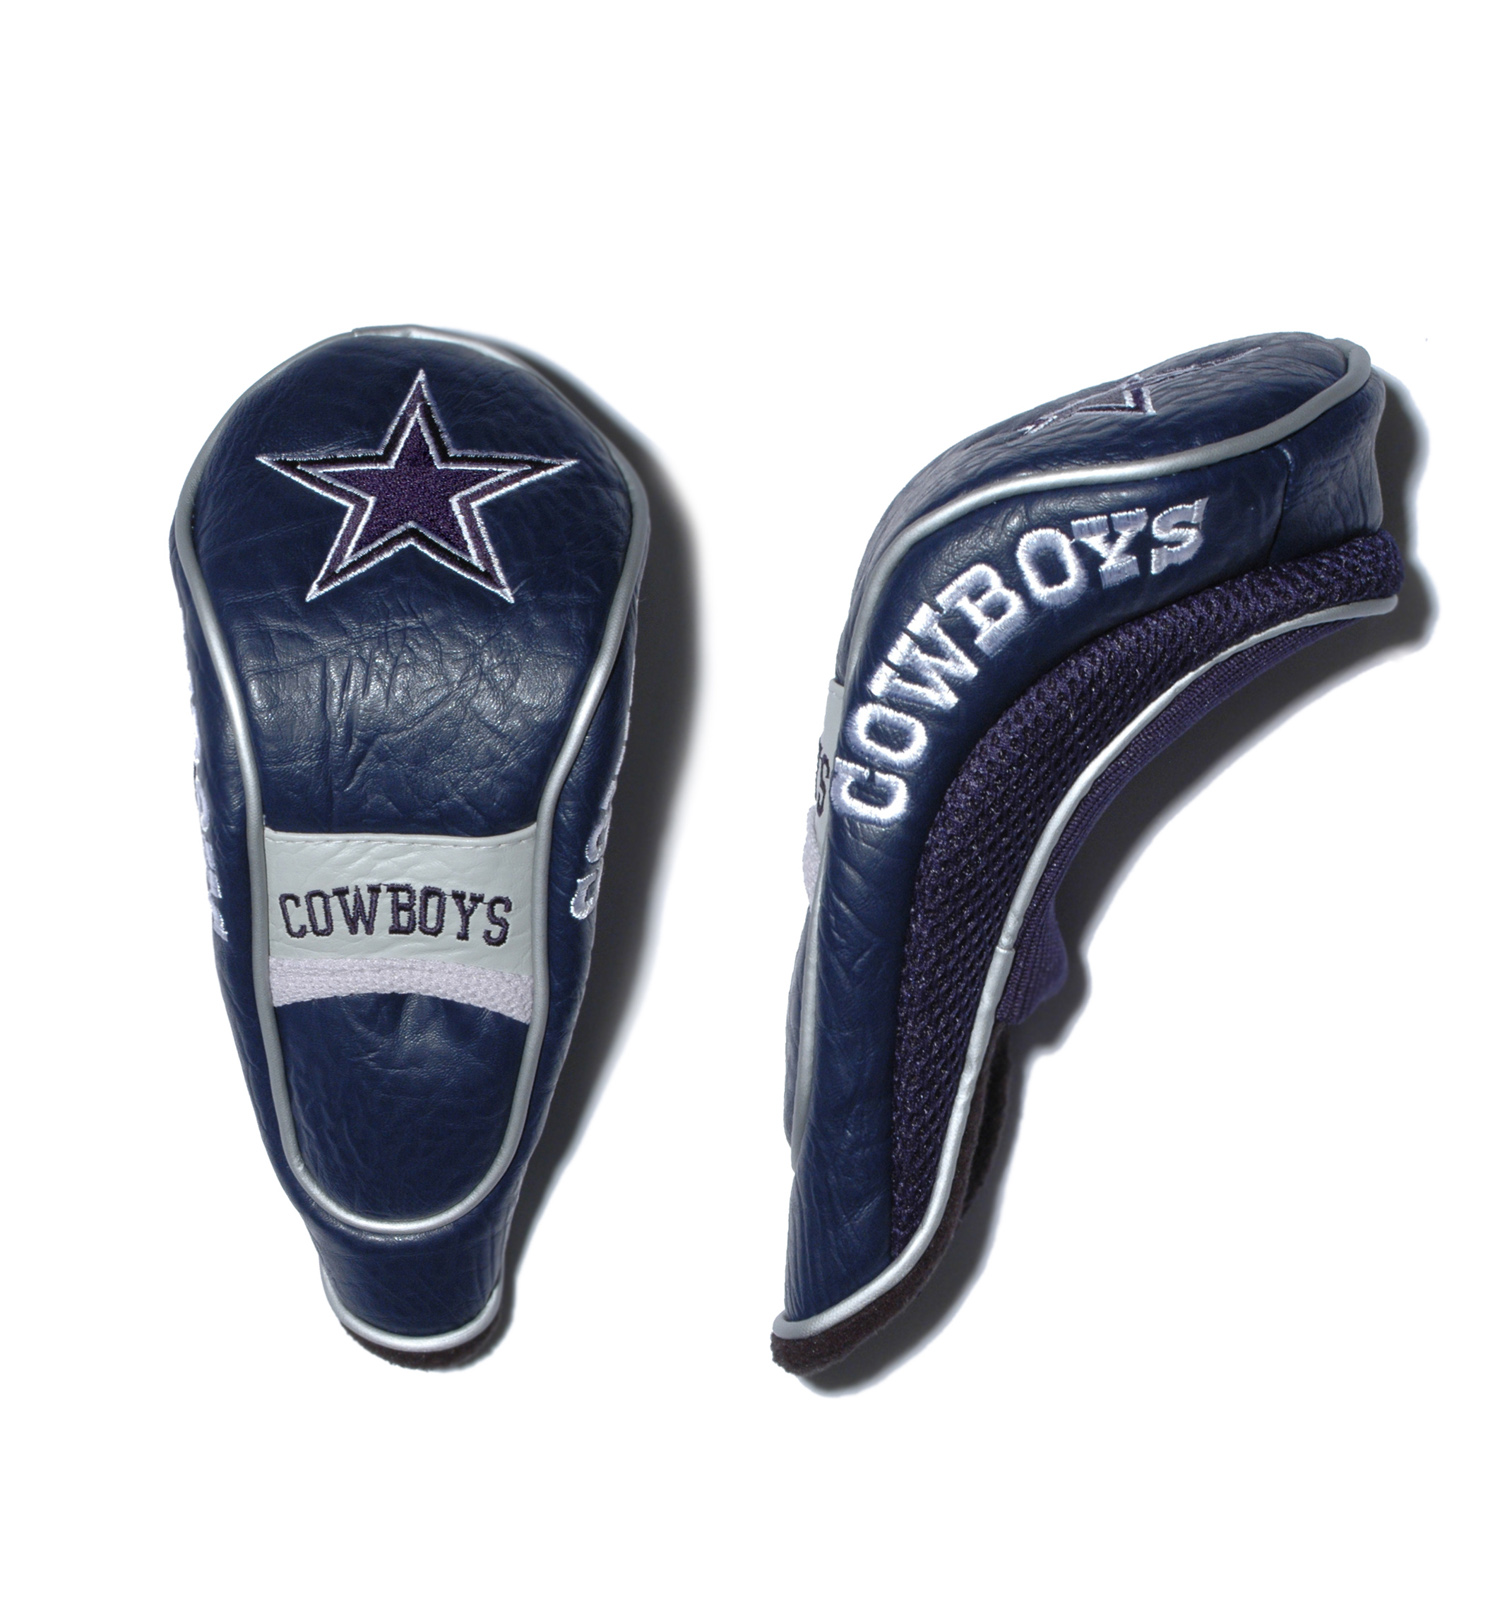 Dallas Cowboys Hybrid Headcover